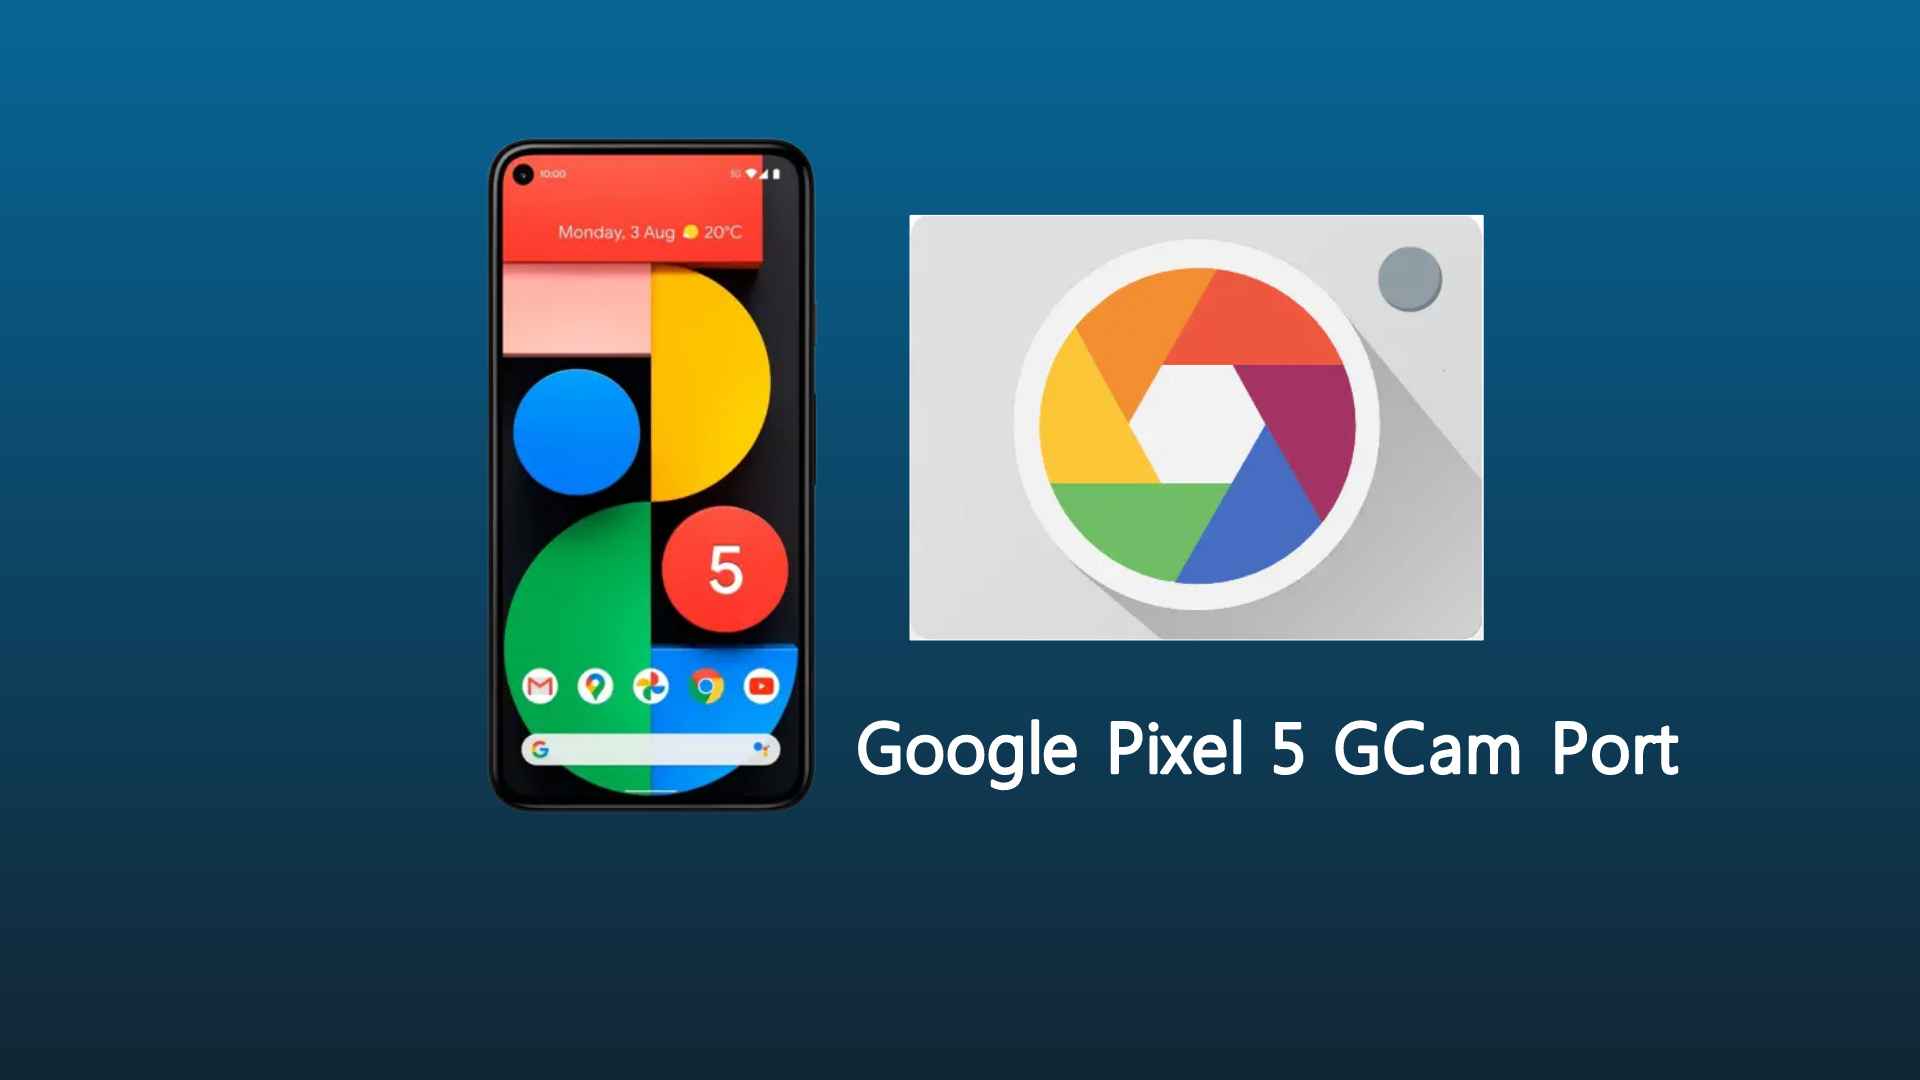 Google Pixel 5 GCam Port